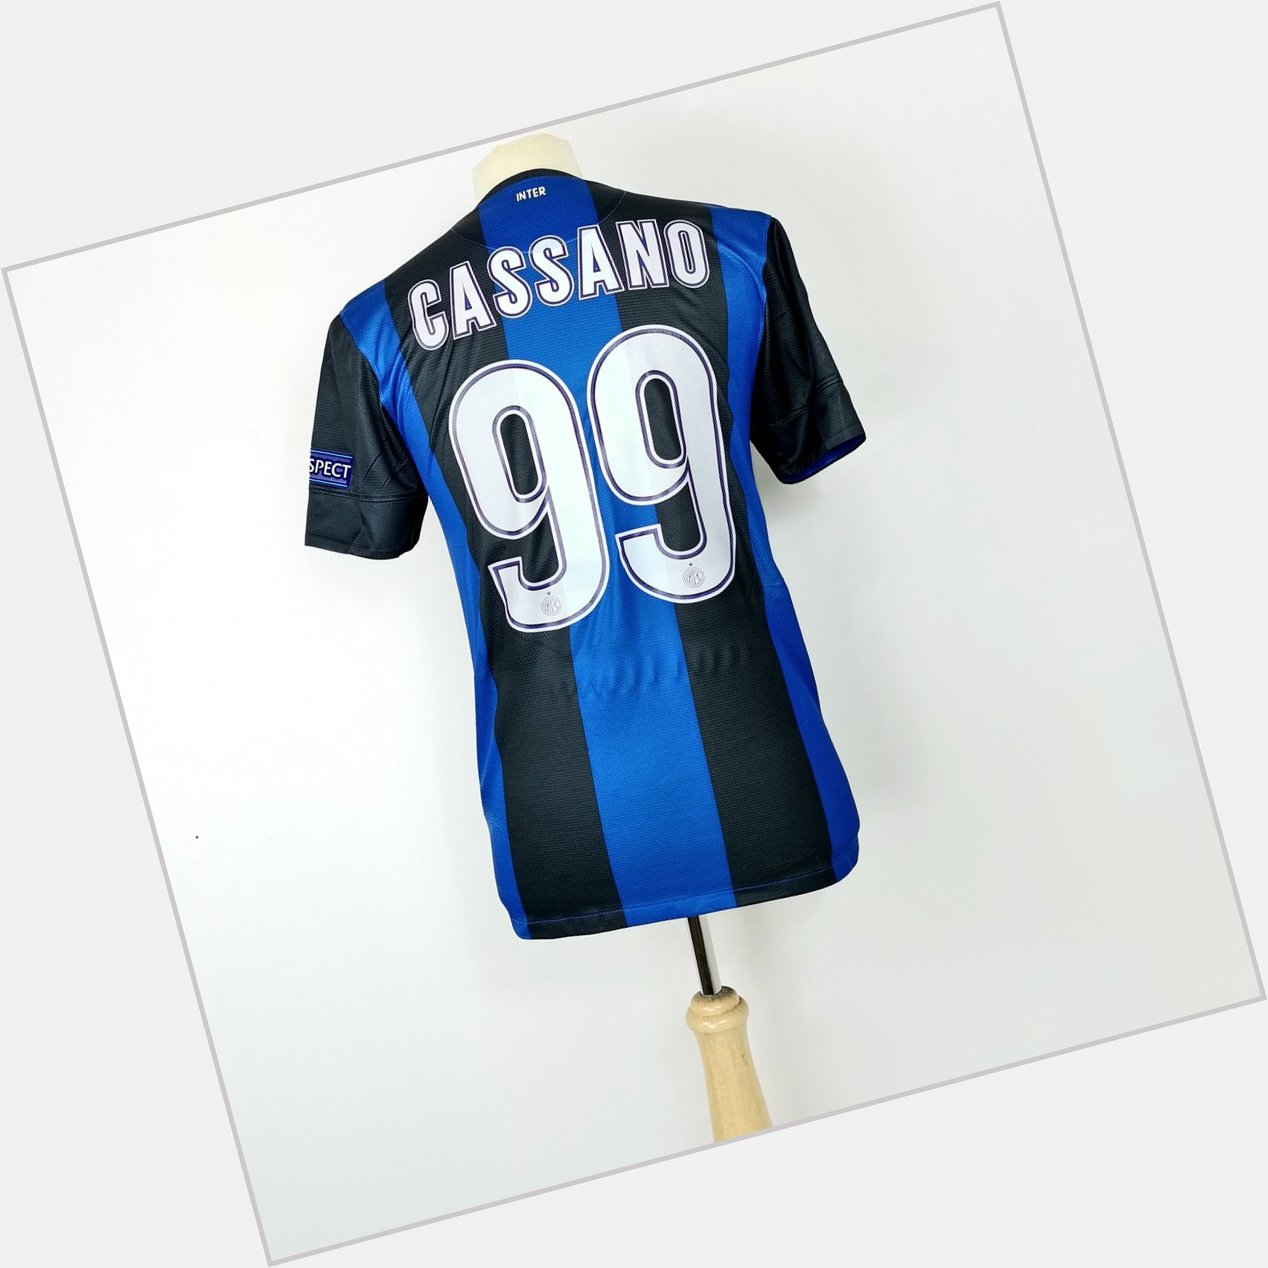 Happy birthday Antonio Cassano!
Two Fantantonio shirts available here:
 